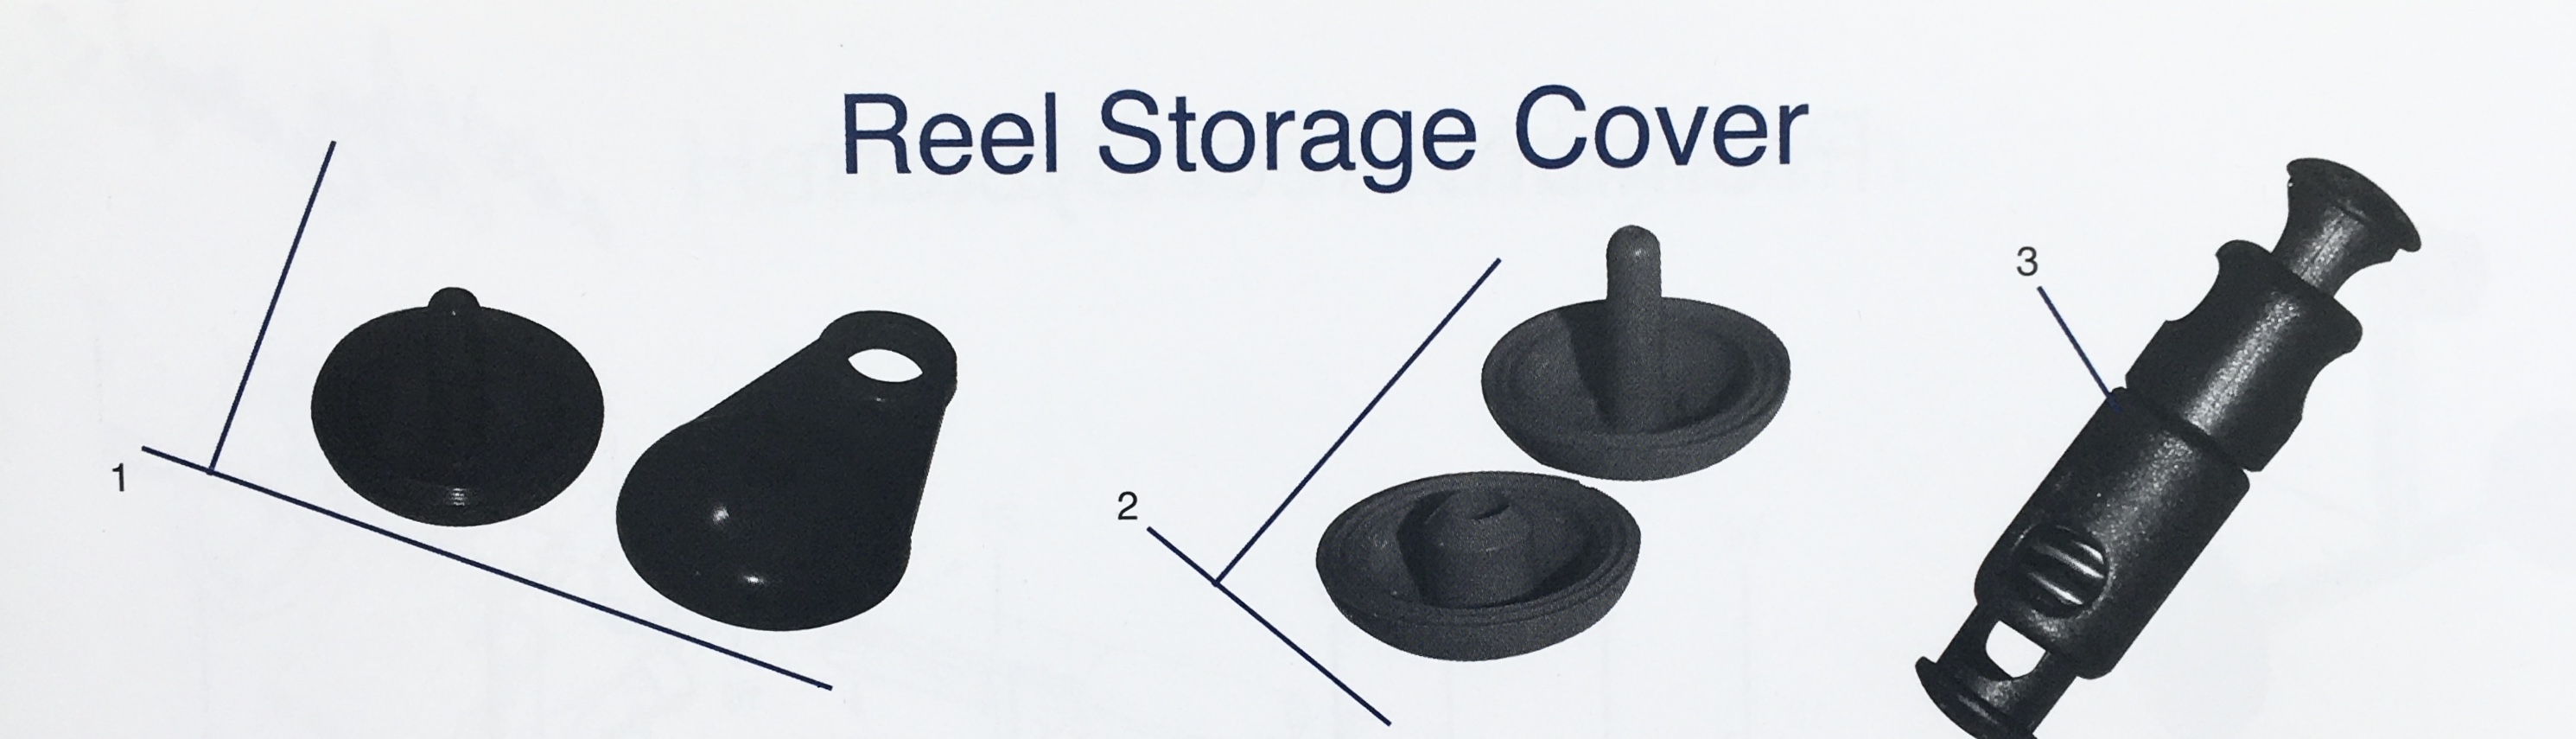 Reel Storage Cover